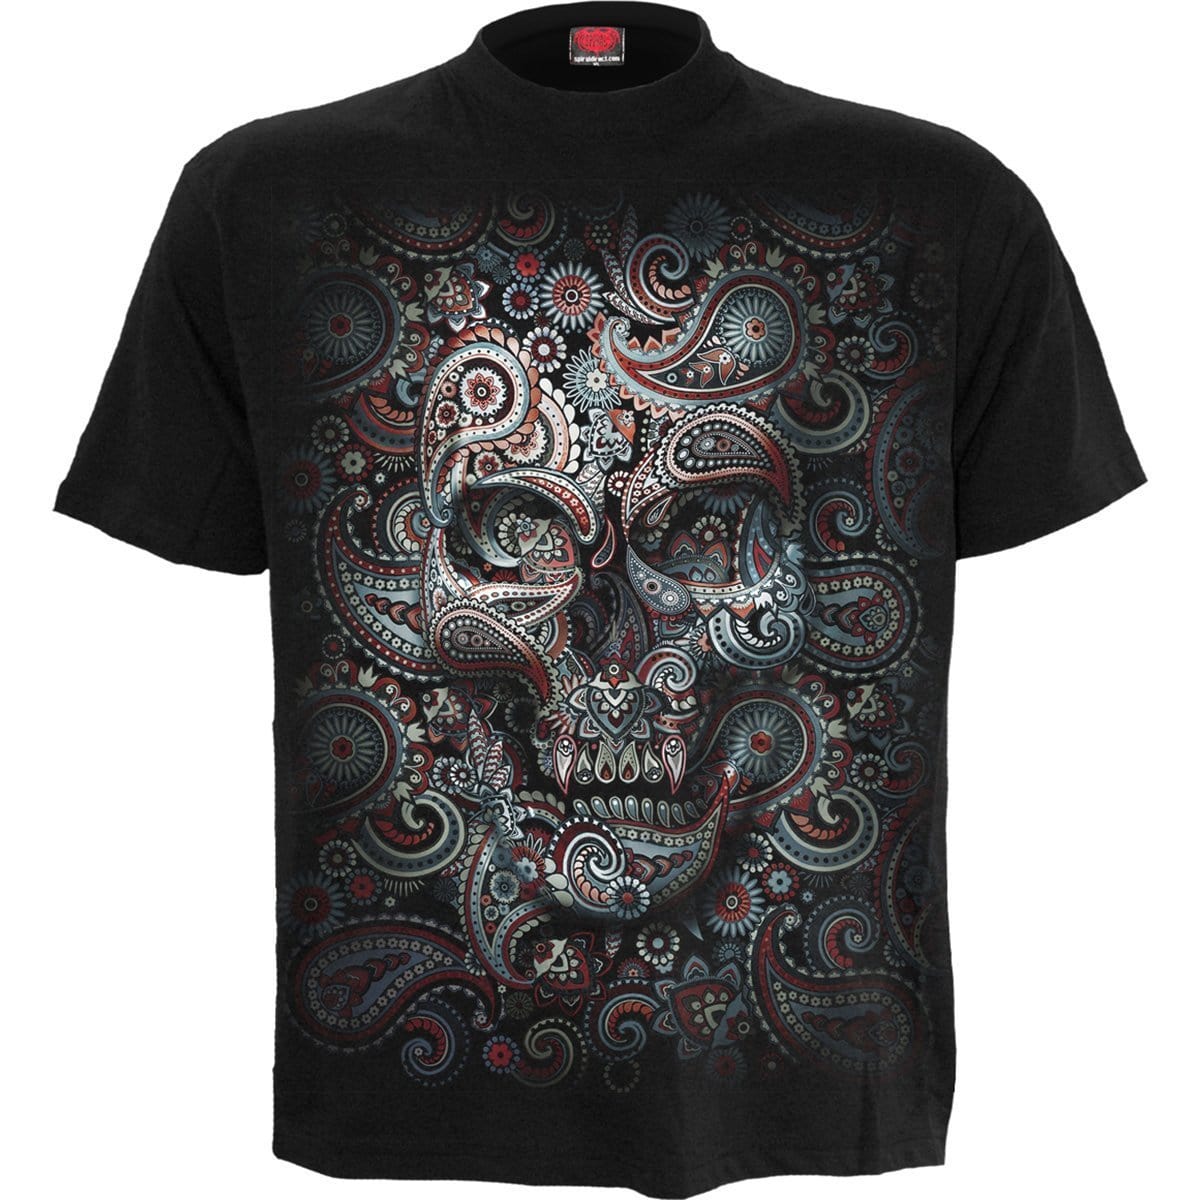 SKULL ILLUSION - Front Print T-Shirt Black - Spiral USA